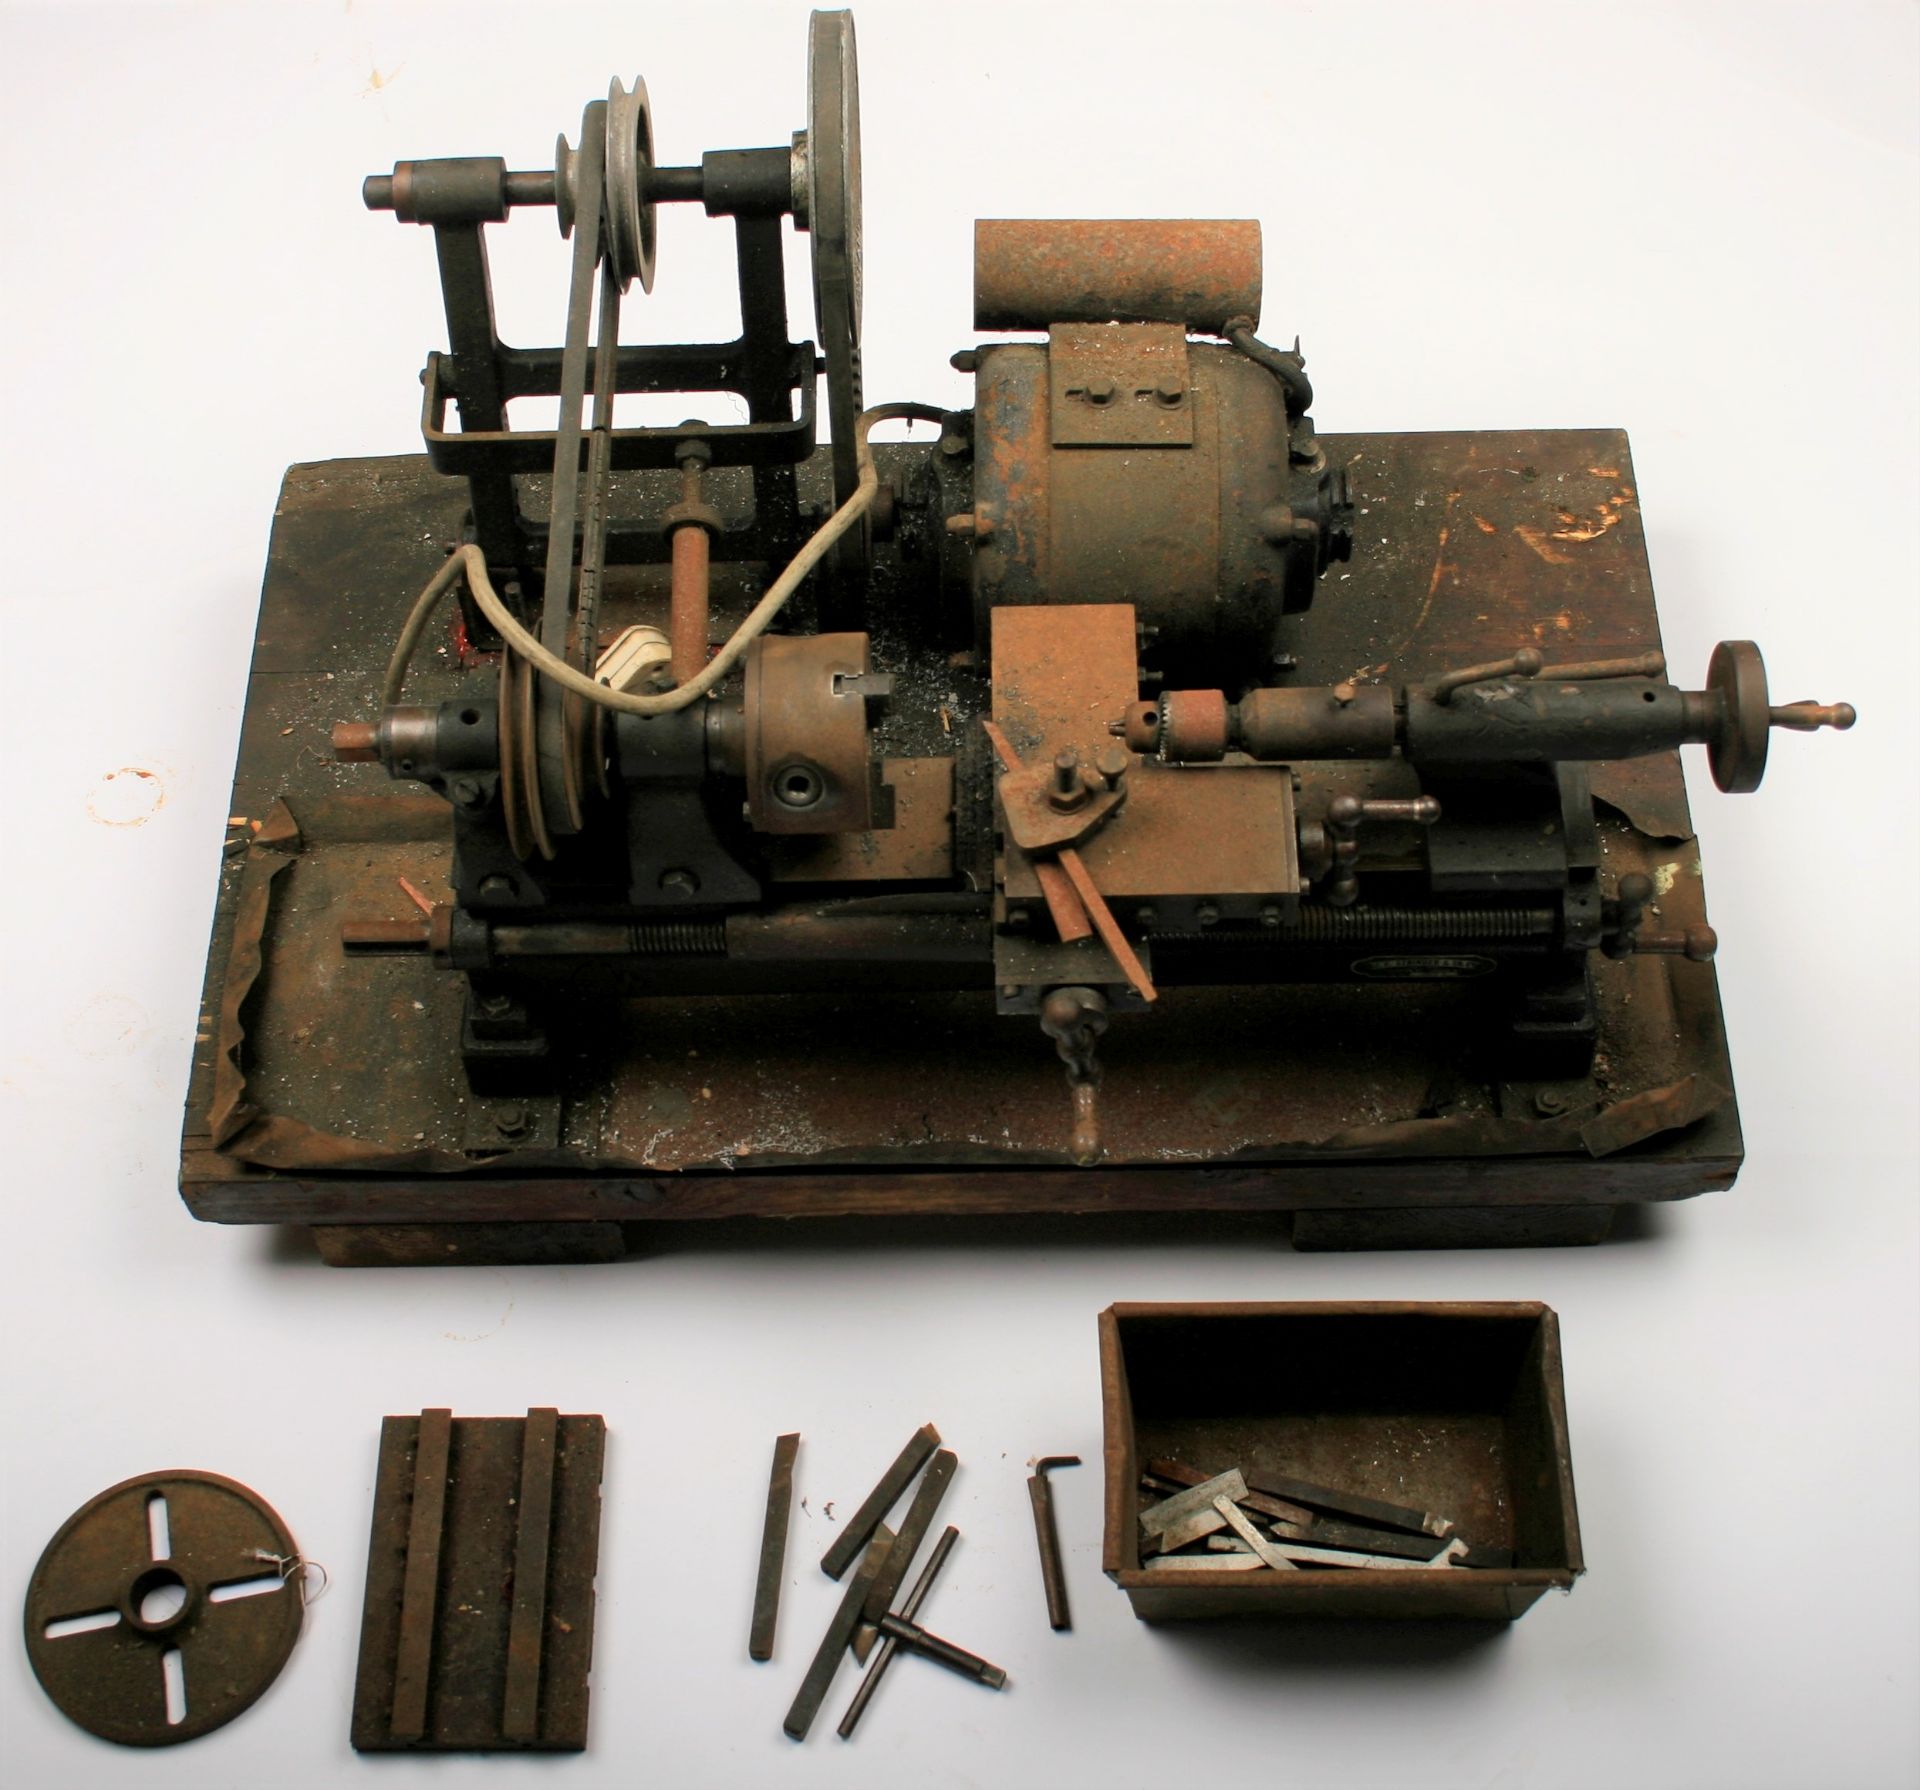 A tool maker's lathe by J F Stringer & Co Ltd, London, ((Qty))